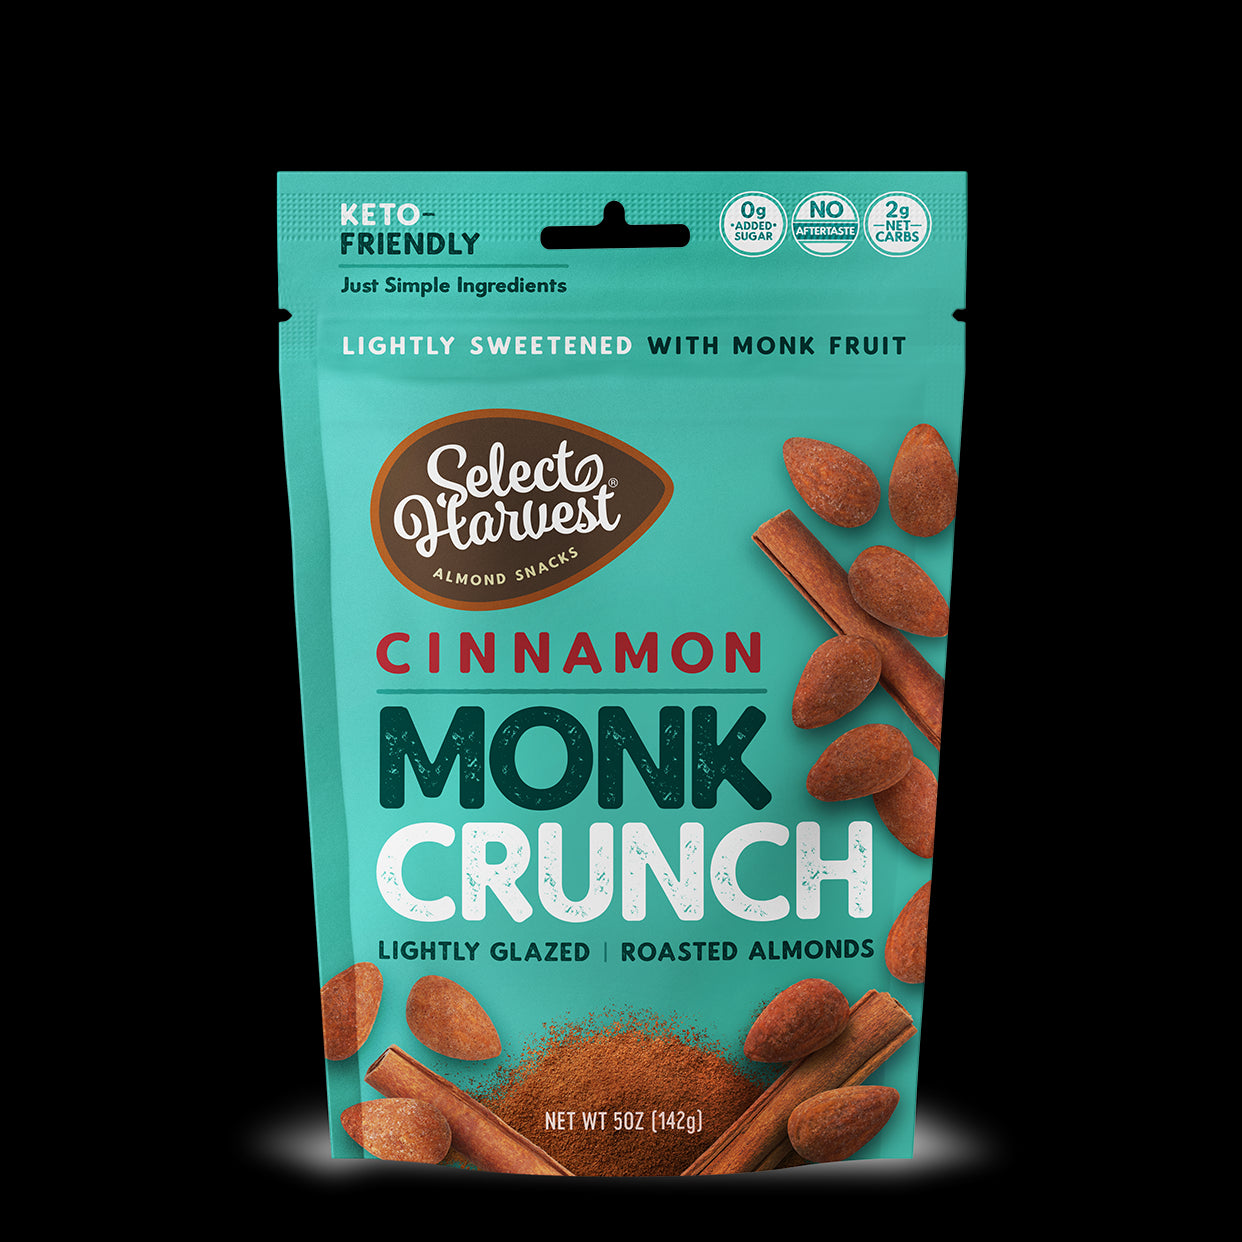 Cinnamon Monk Crunch - New Formulation!